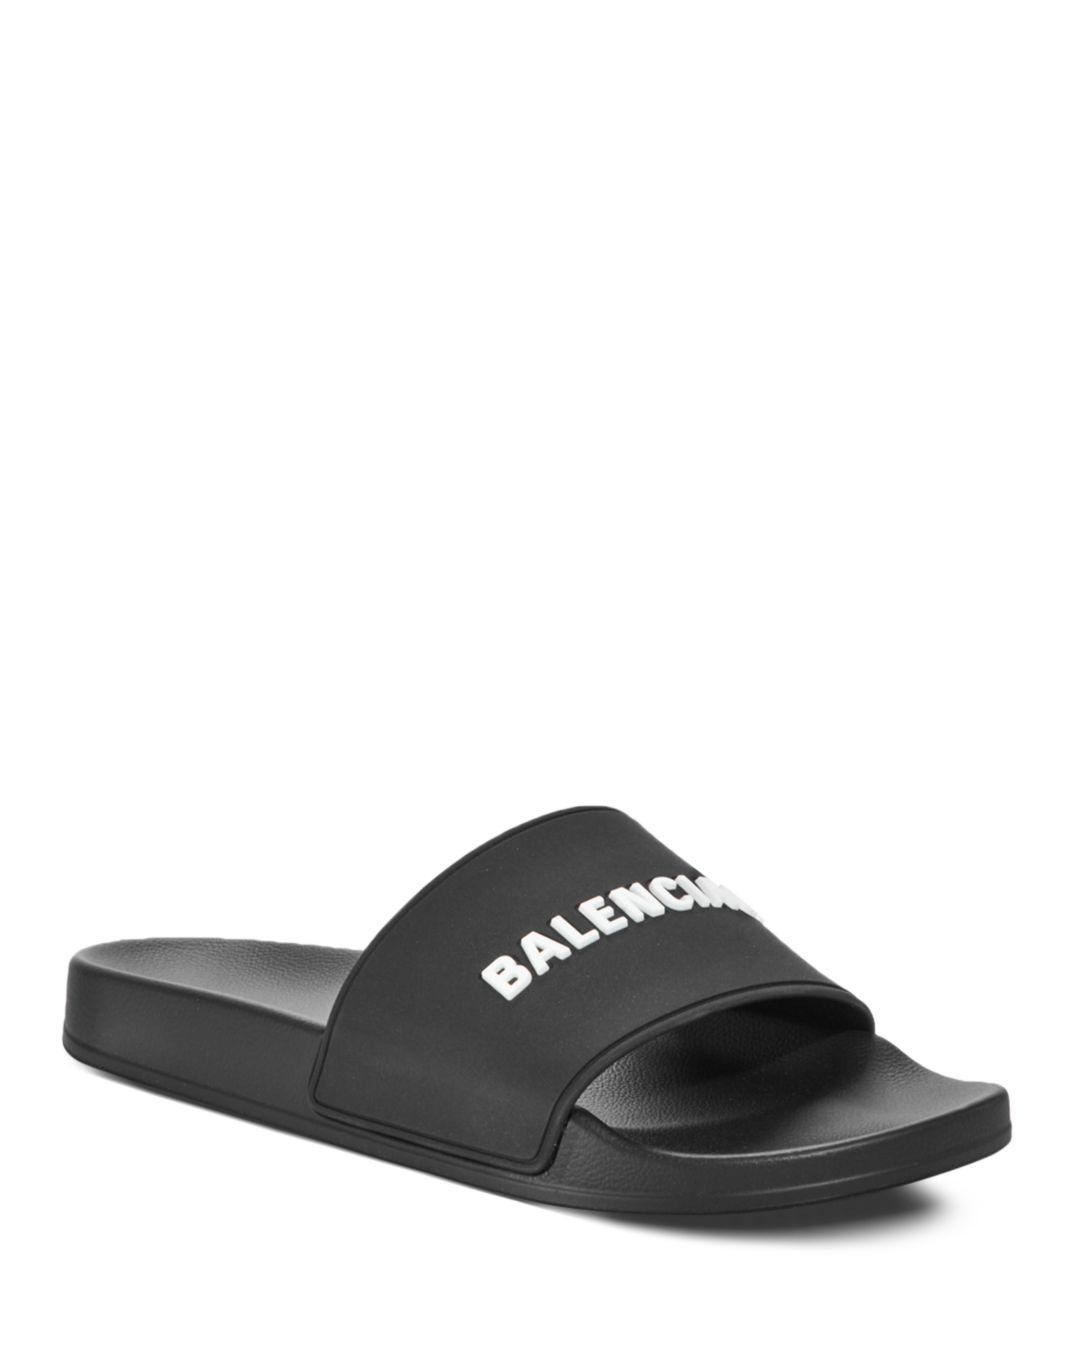 Balenciaga Rubber Men's Slide Sandals in Black for Men - Lyst